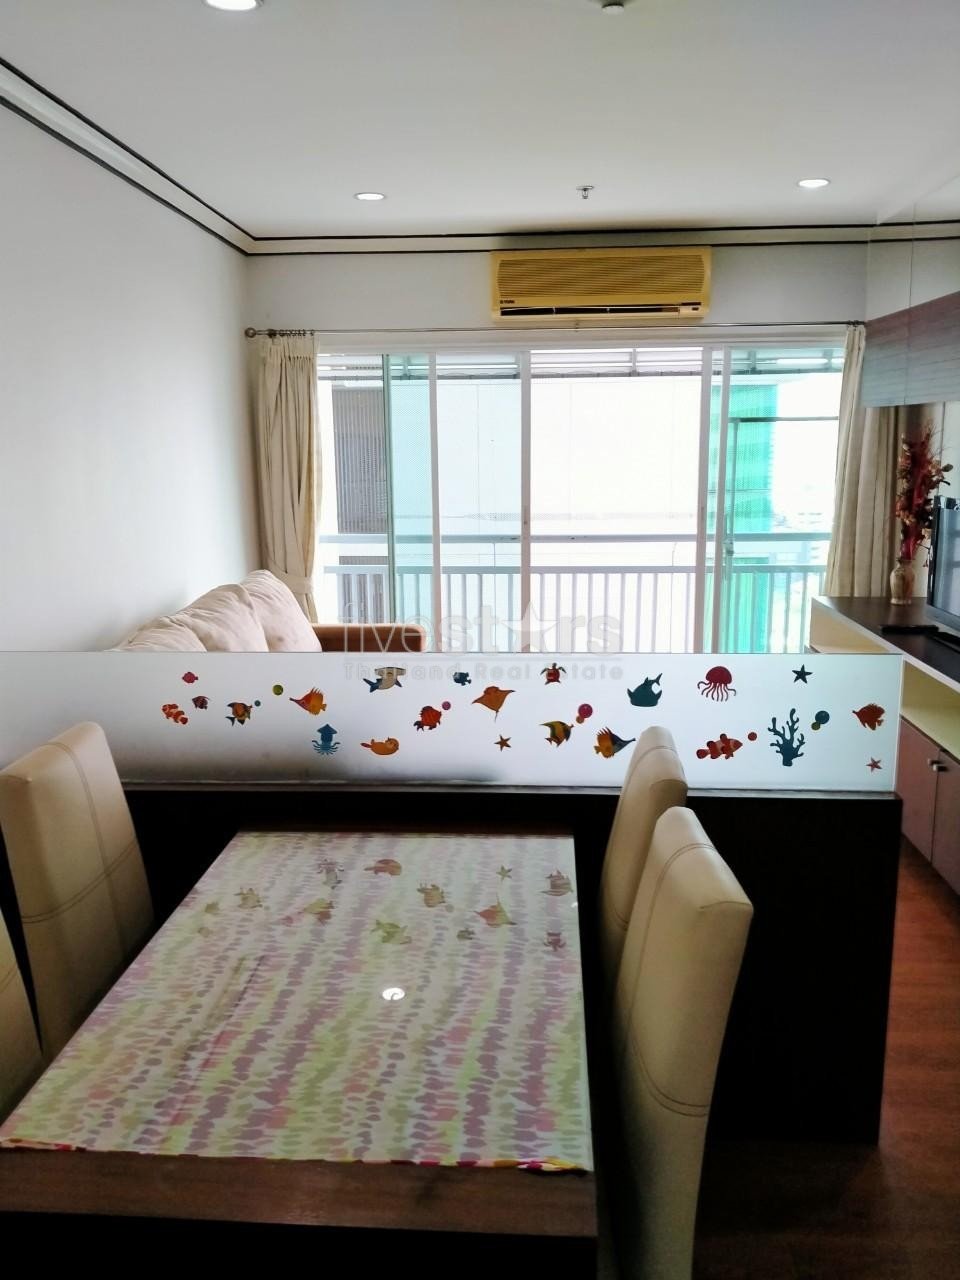 2 bedroom condo for sale close to Sukhumvit MRT Station 3962521827